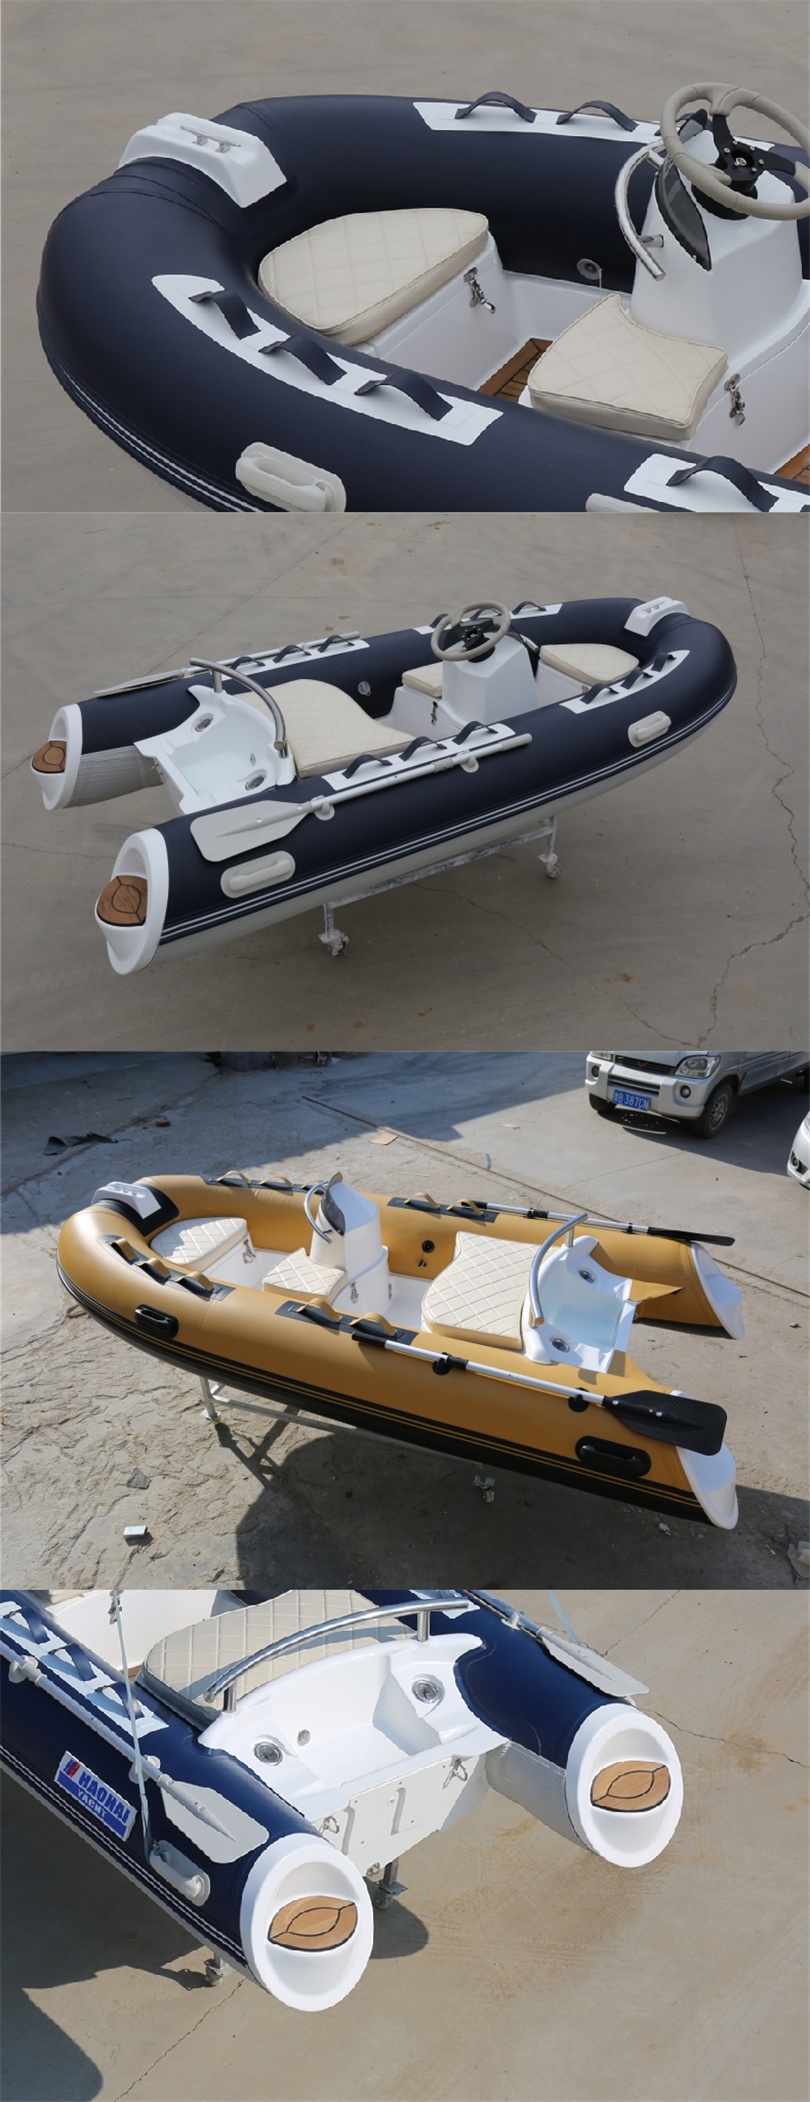 Hot Selling Rigid Hull Inflatable Rib330 Boat Engines Rib Boats Rigid Inflatable Boat China